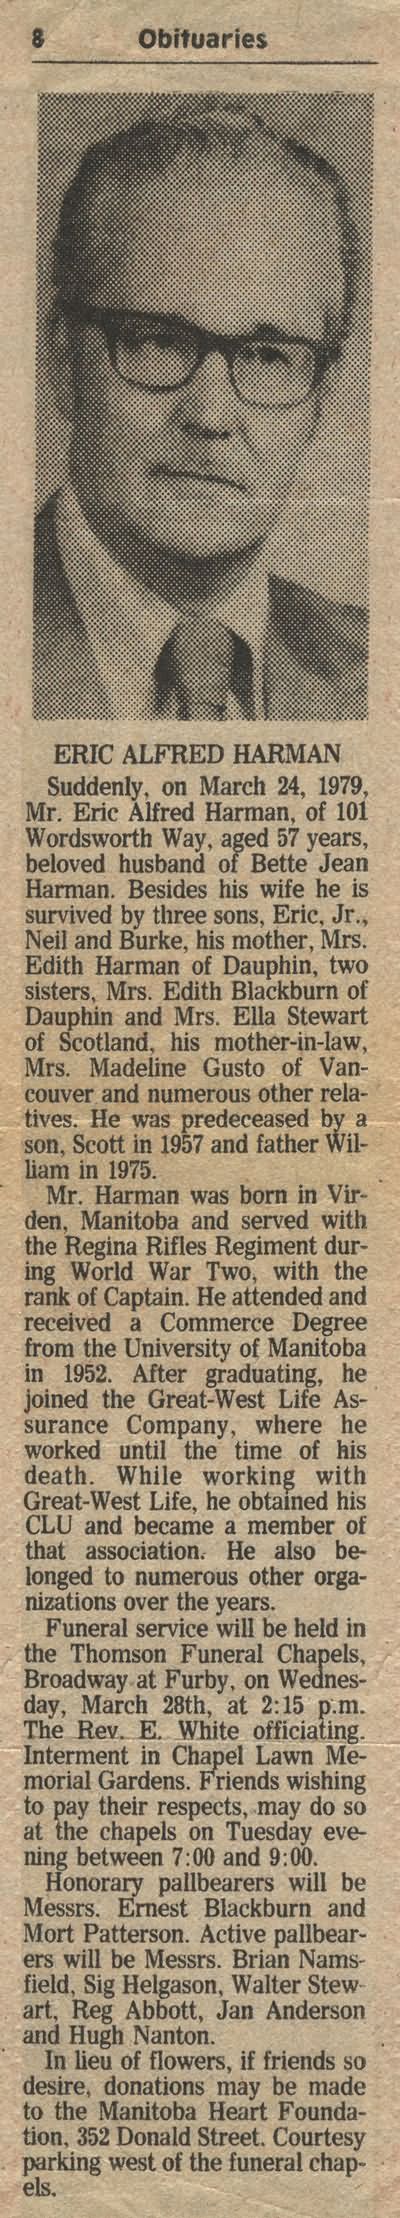 The Obituary of Eric Alfred Harman - 24th Mar 1979